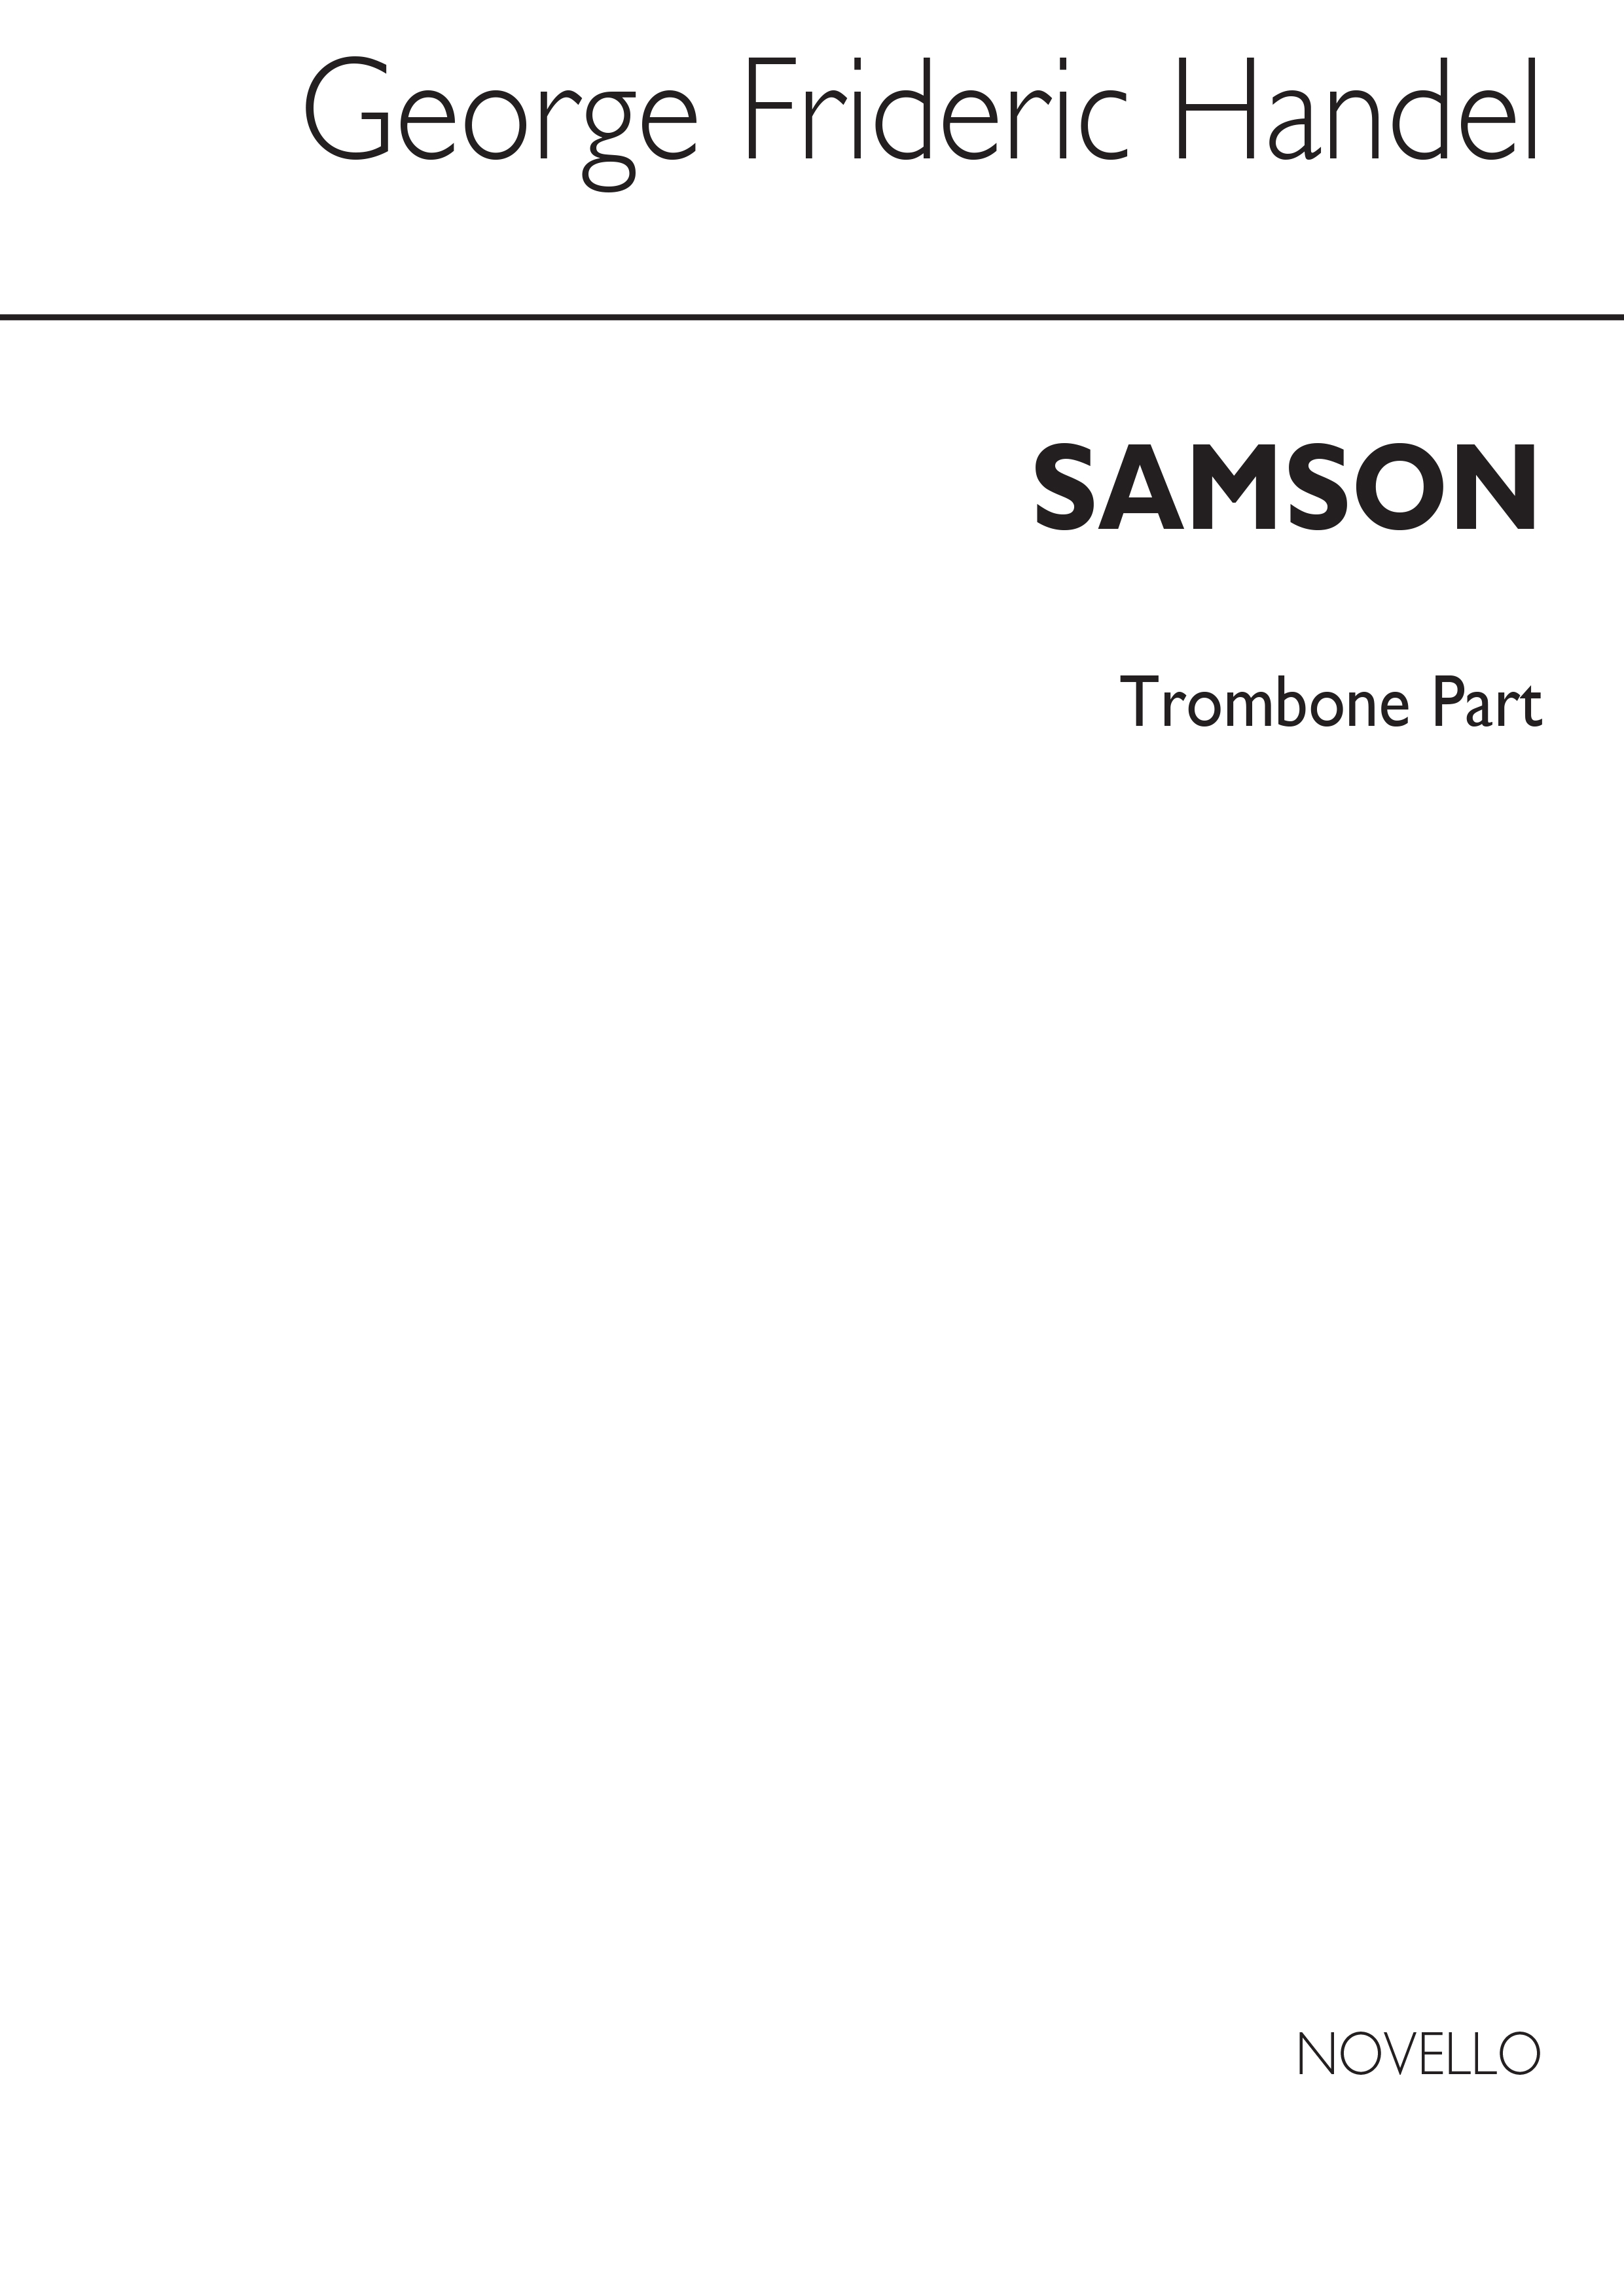 Georg Friedrich Hndel: Samson (Trombone Parts): Opera: Parts